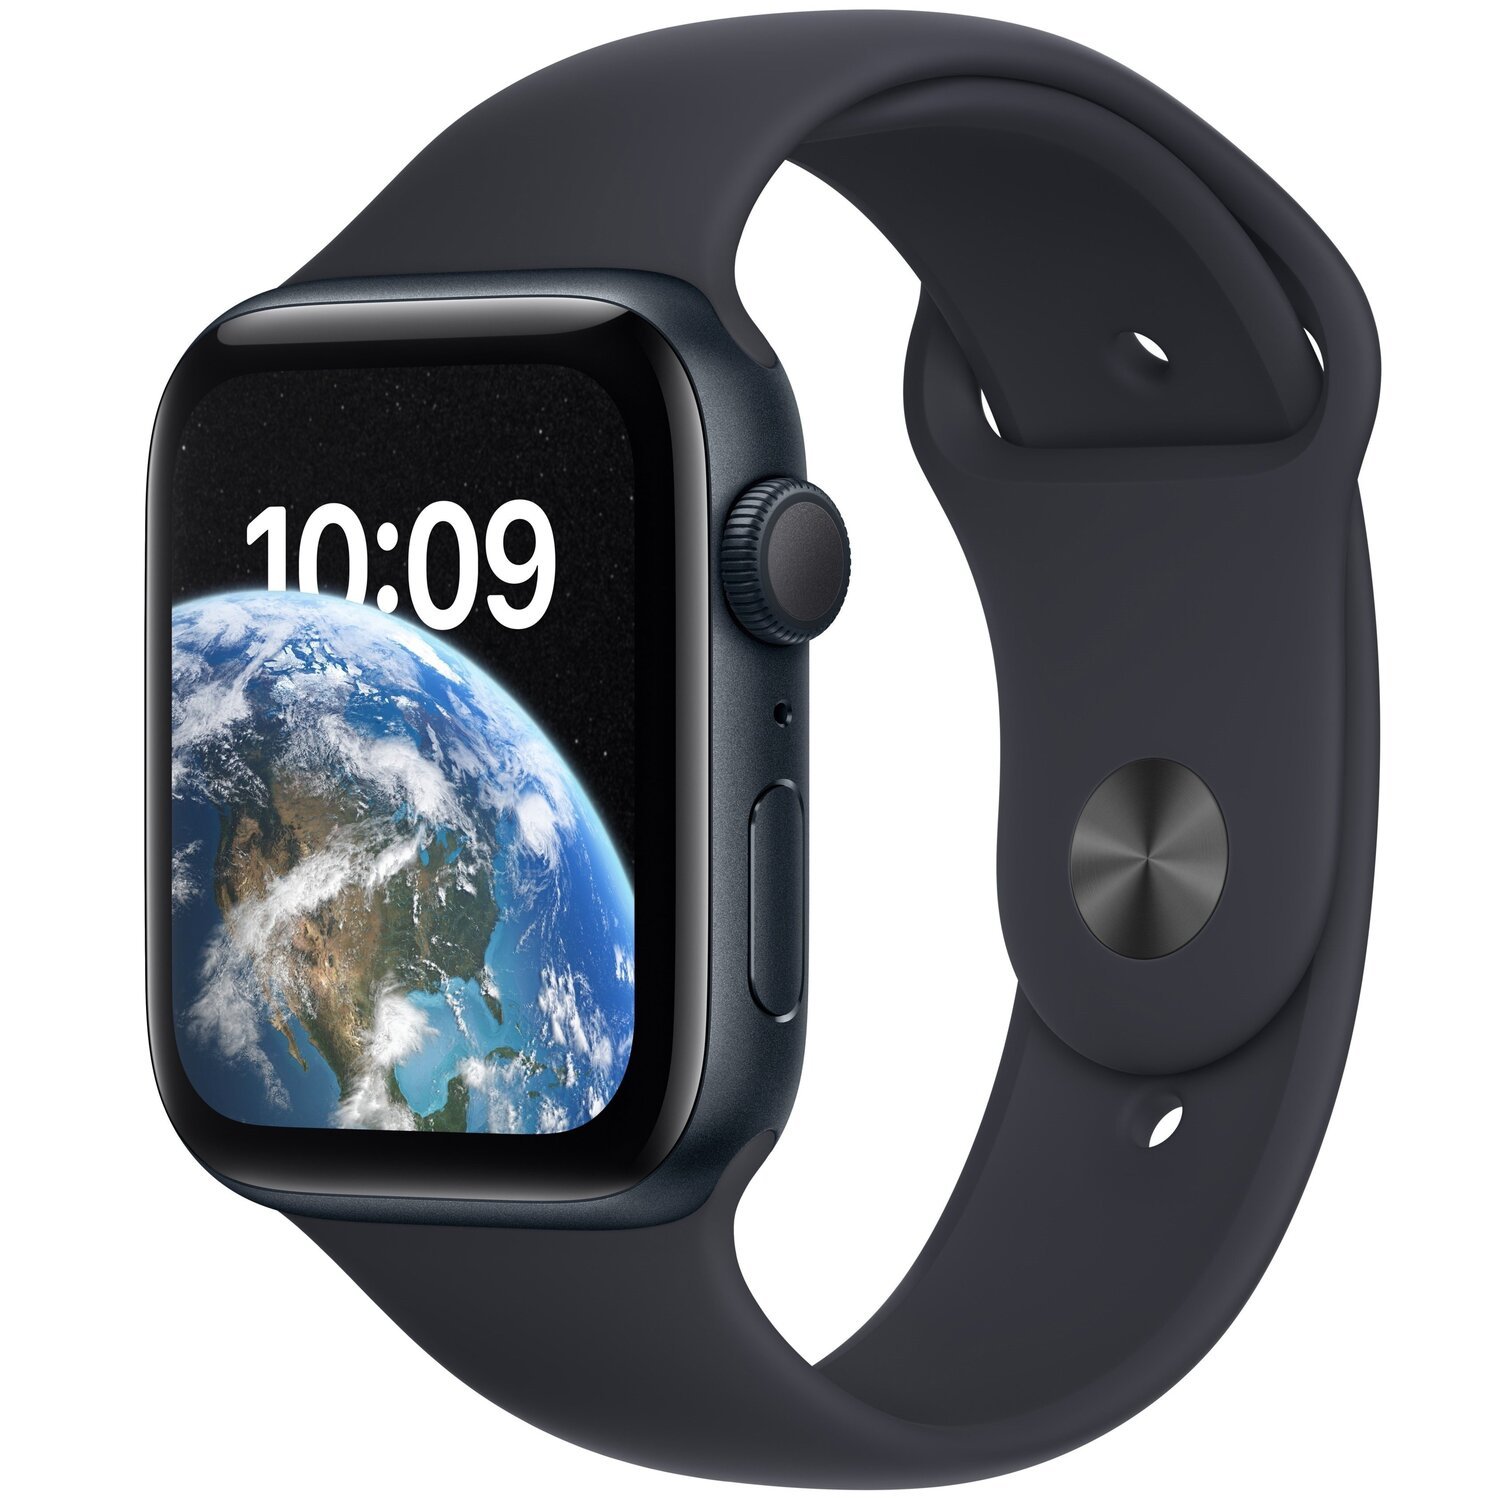 Смартгодинники Apple Watch